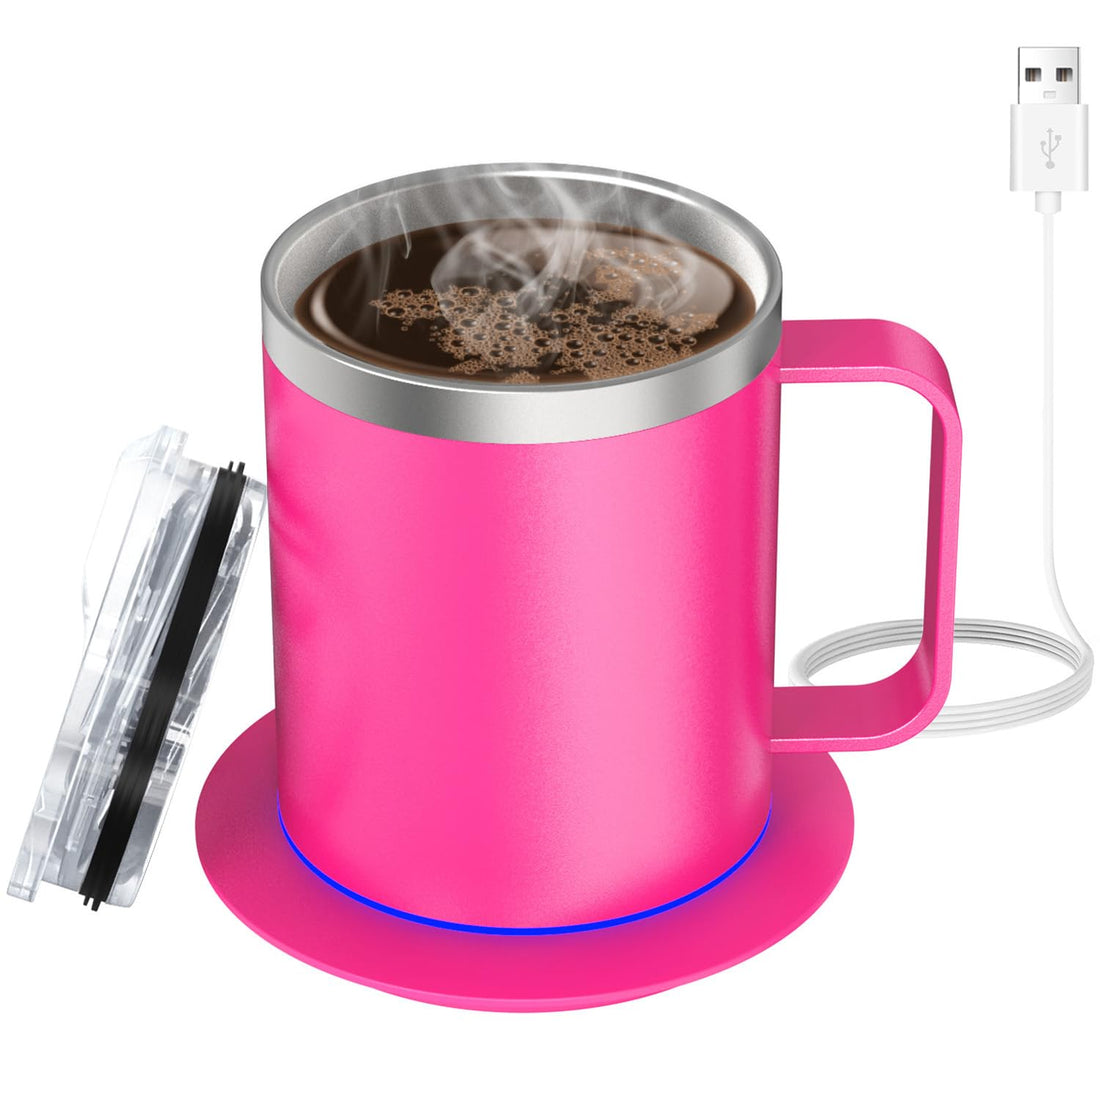 Self Heating Coffee Mug with Double-Layer 18/8 Stainless Steel,USB Powered Coffee Mug Warmer Set,Heated Mug for Coffee (12oz Rose)